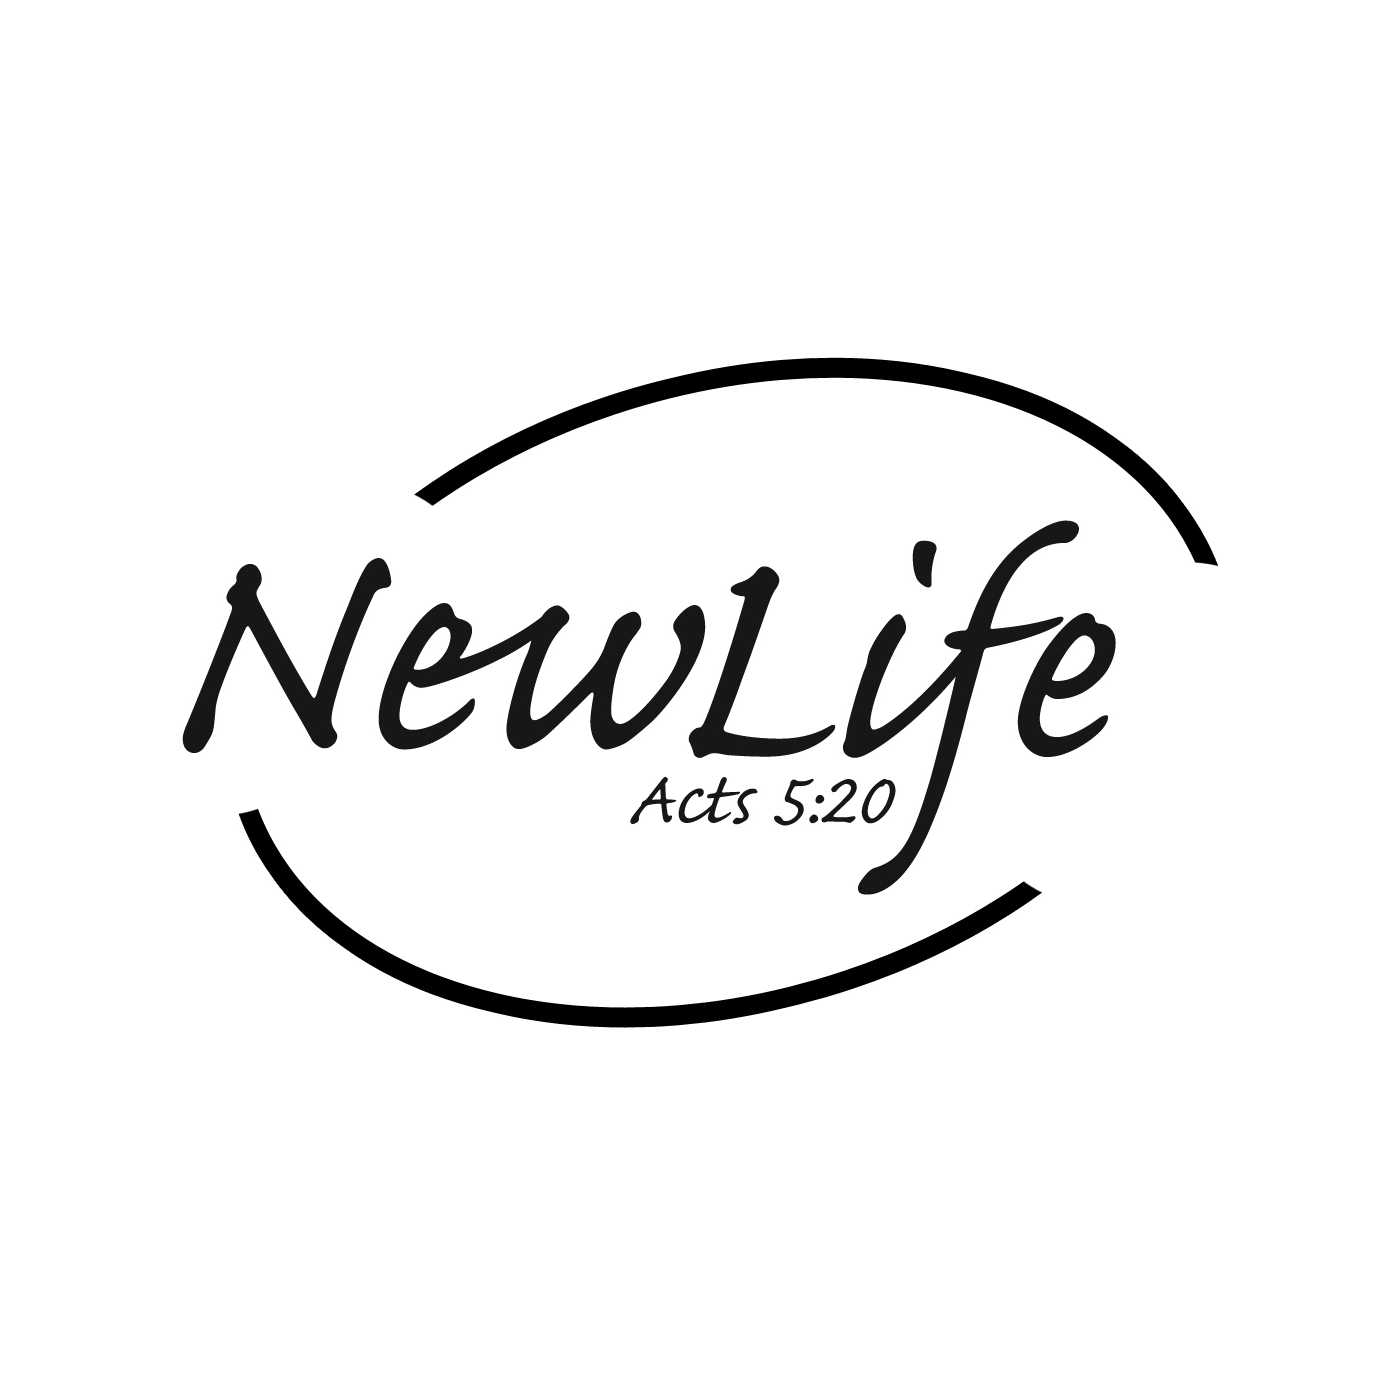 New Life Alliance Church